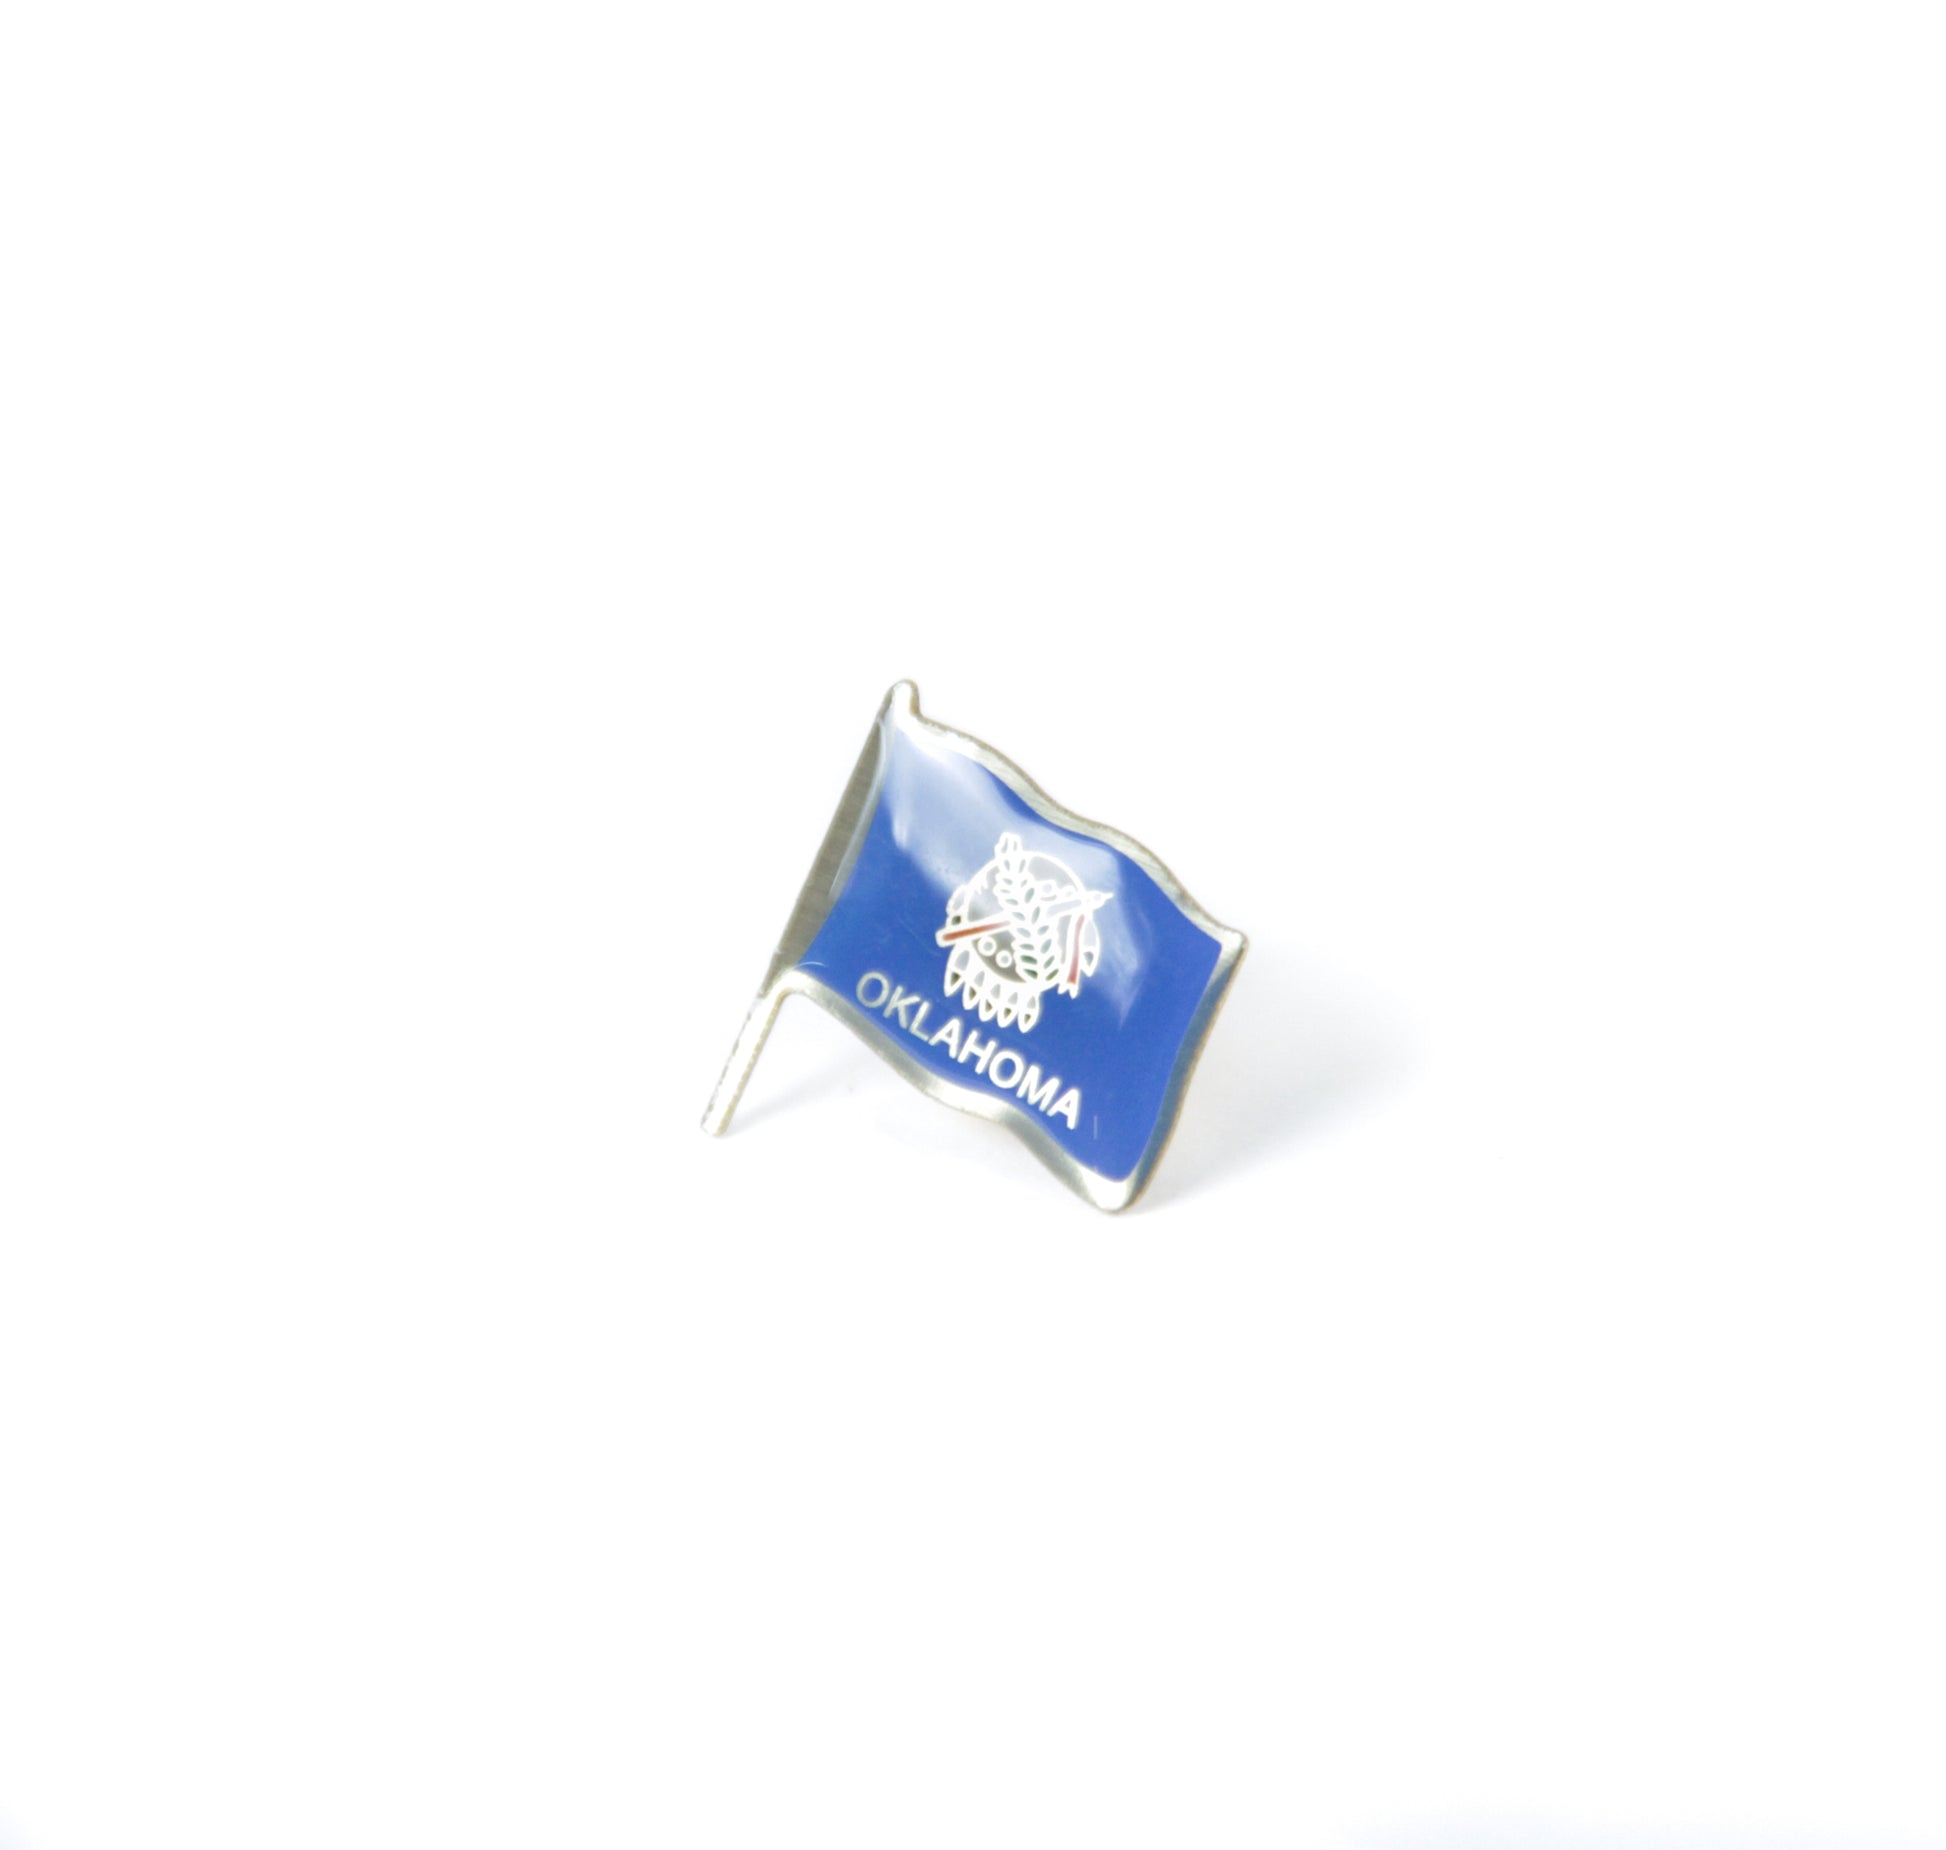 oklahoma state flag pin enamel pin lapel pin souvenir blue flag osage shield collection